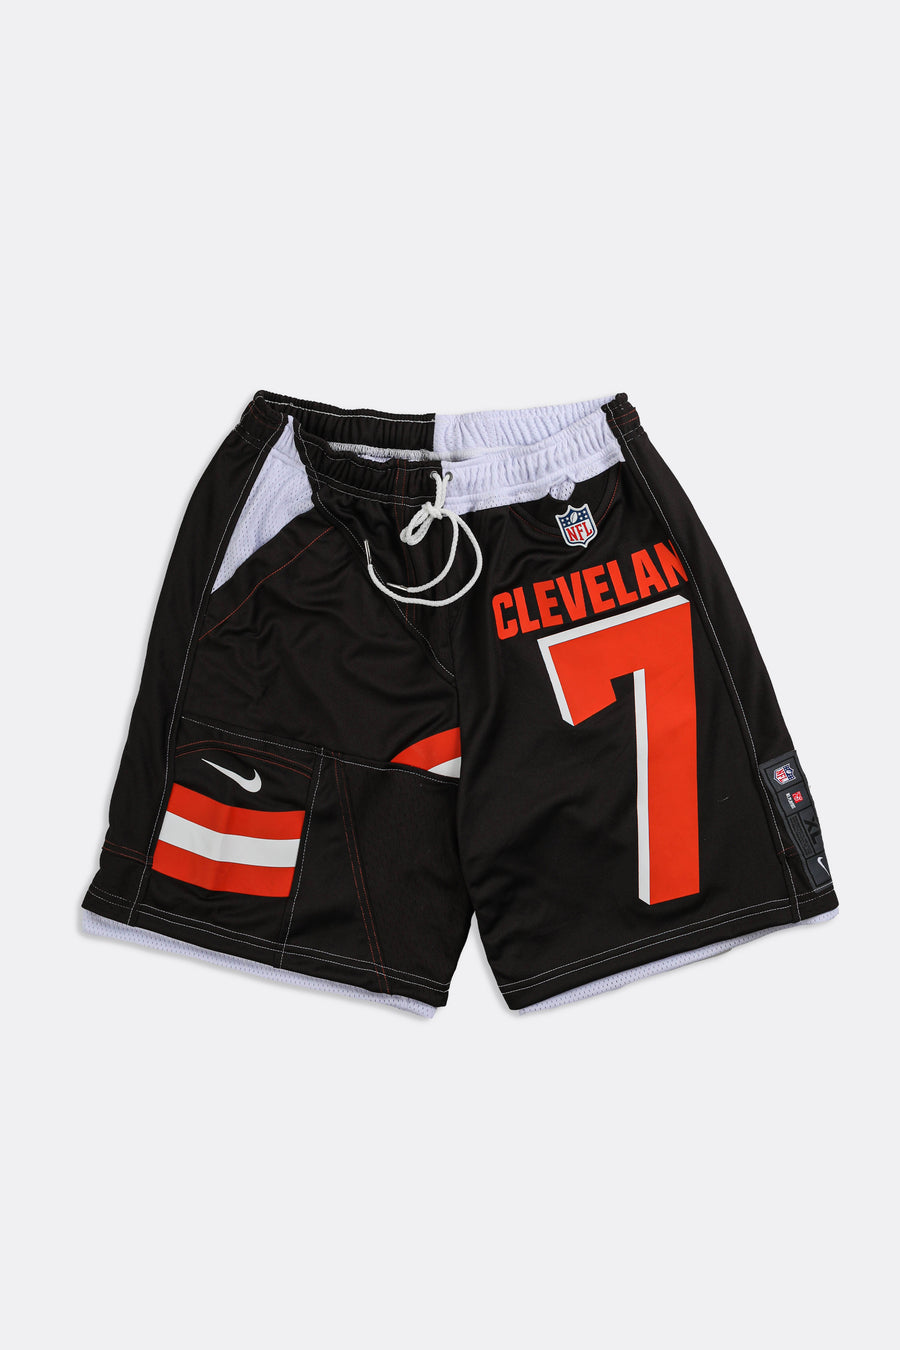 Unisex Rework Browns NFL Jersey Shorts - Women-M, Men-S